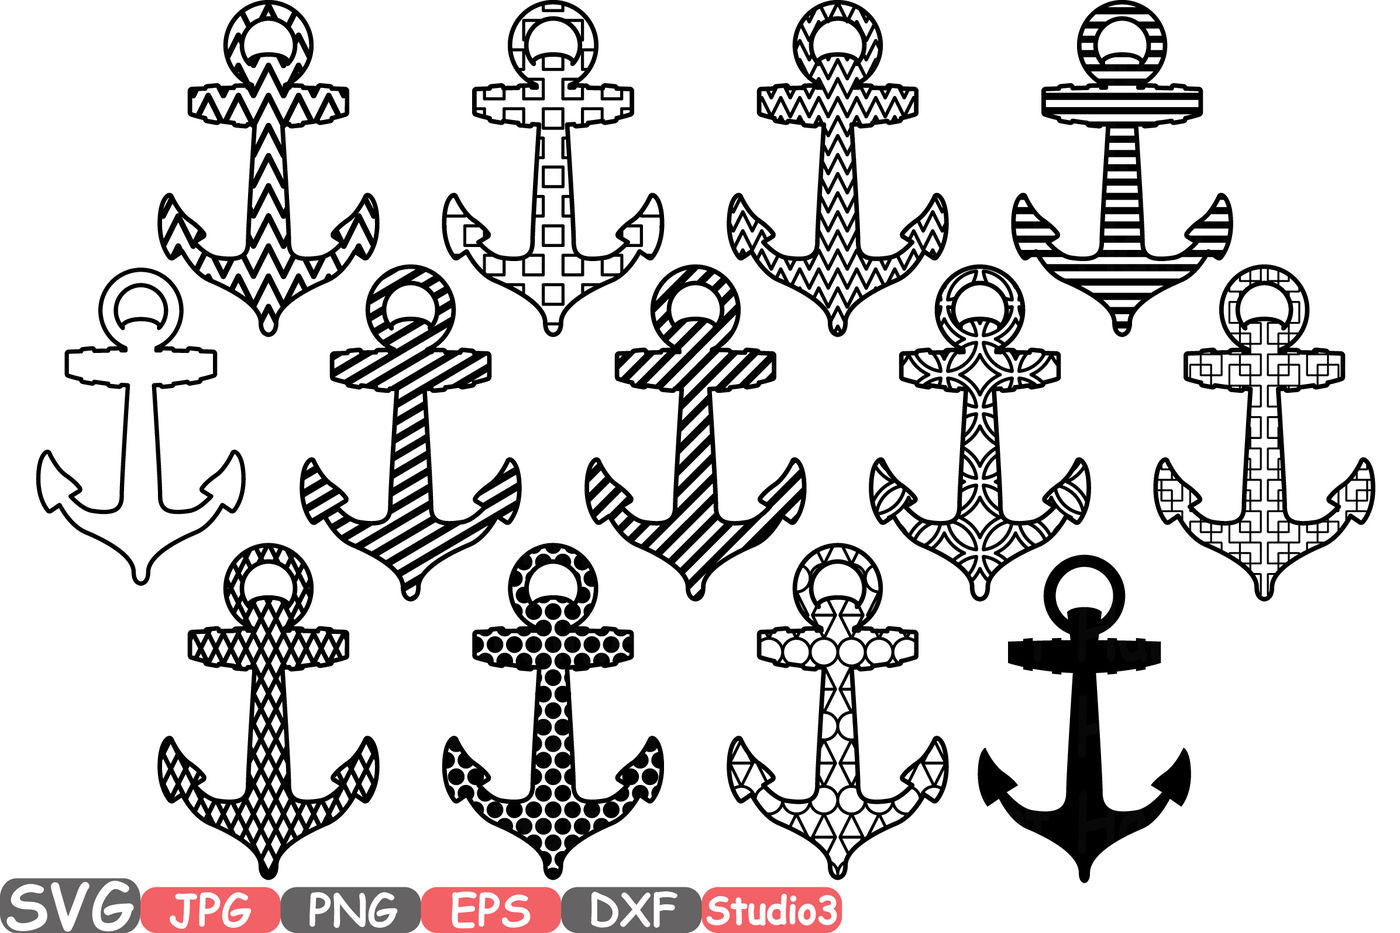 Download Nautical Anchor Svg Silhouette Cutting Files Cricut Design Studio3 Cameo Vinyl Die Cut Machines Monogram Clipart Navy Boat Marine 674s By Hamhamart Thehungryjpeg Com